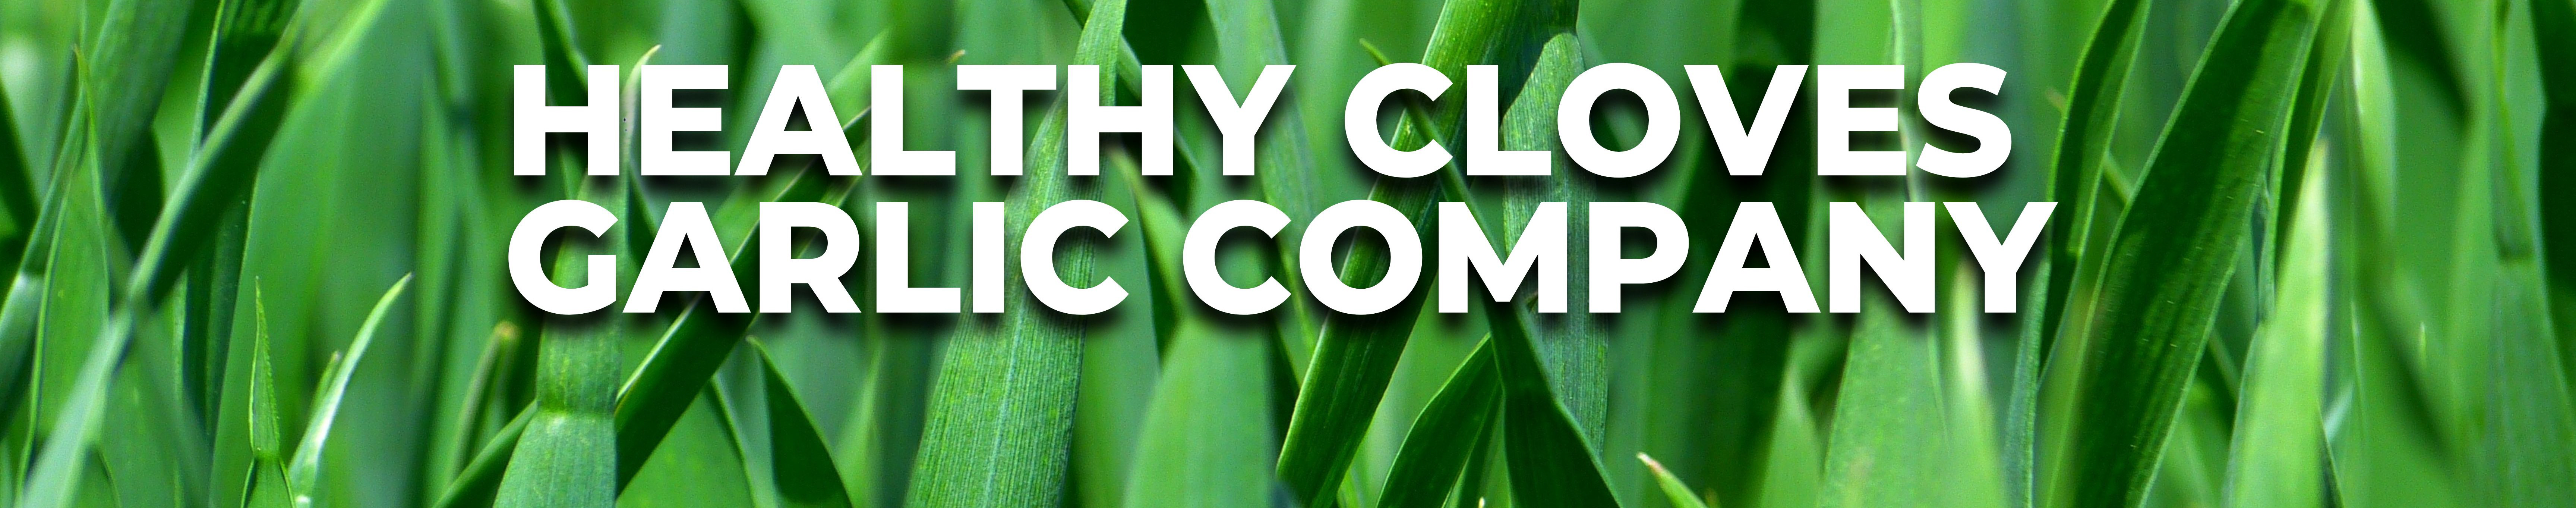 Healthy Cloves Garlic Company's profile banner